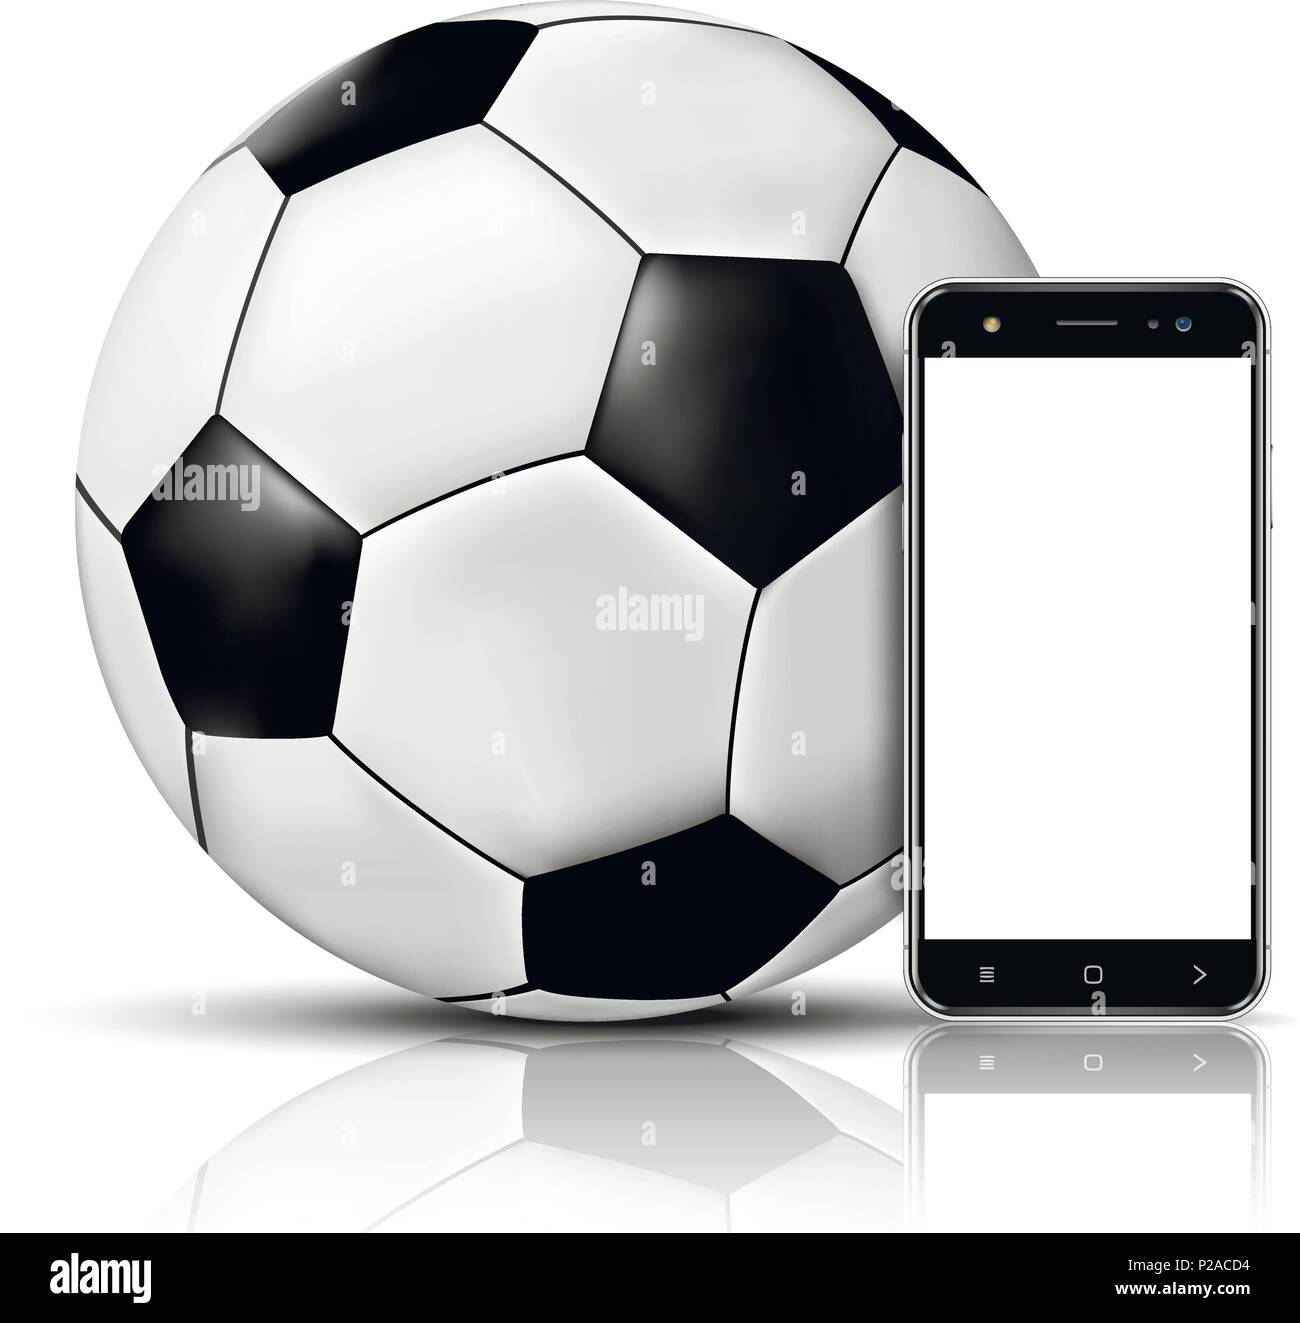 Fußball und Smartphone mit leeren Bildschirm. Vector Illustration. Stock Vektor